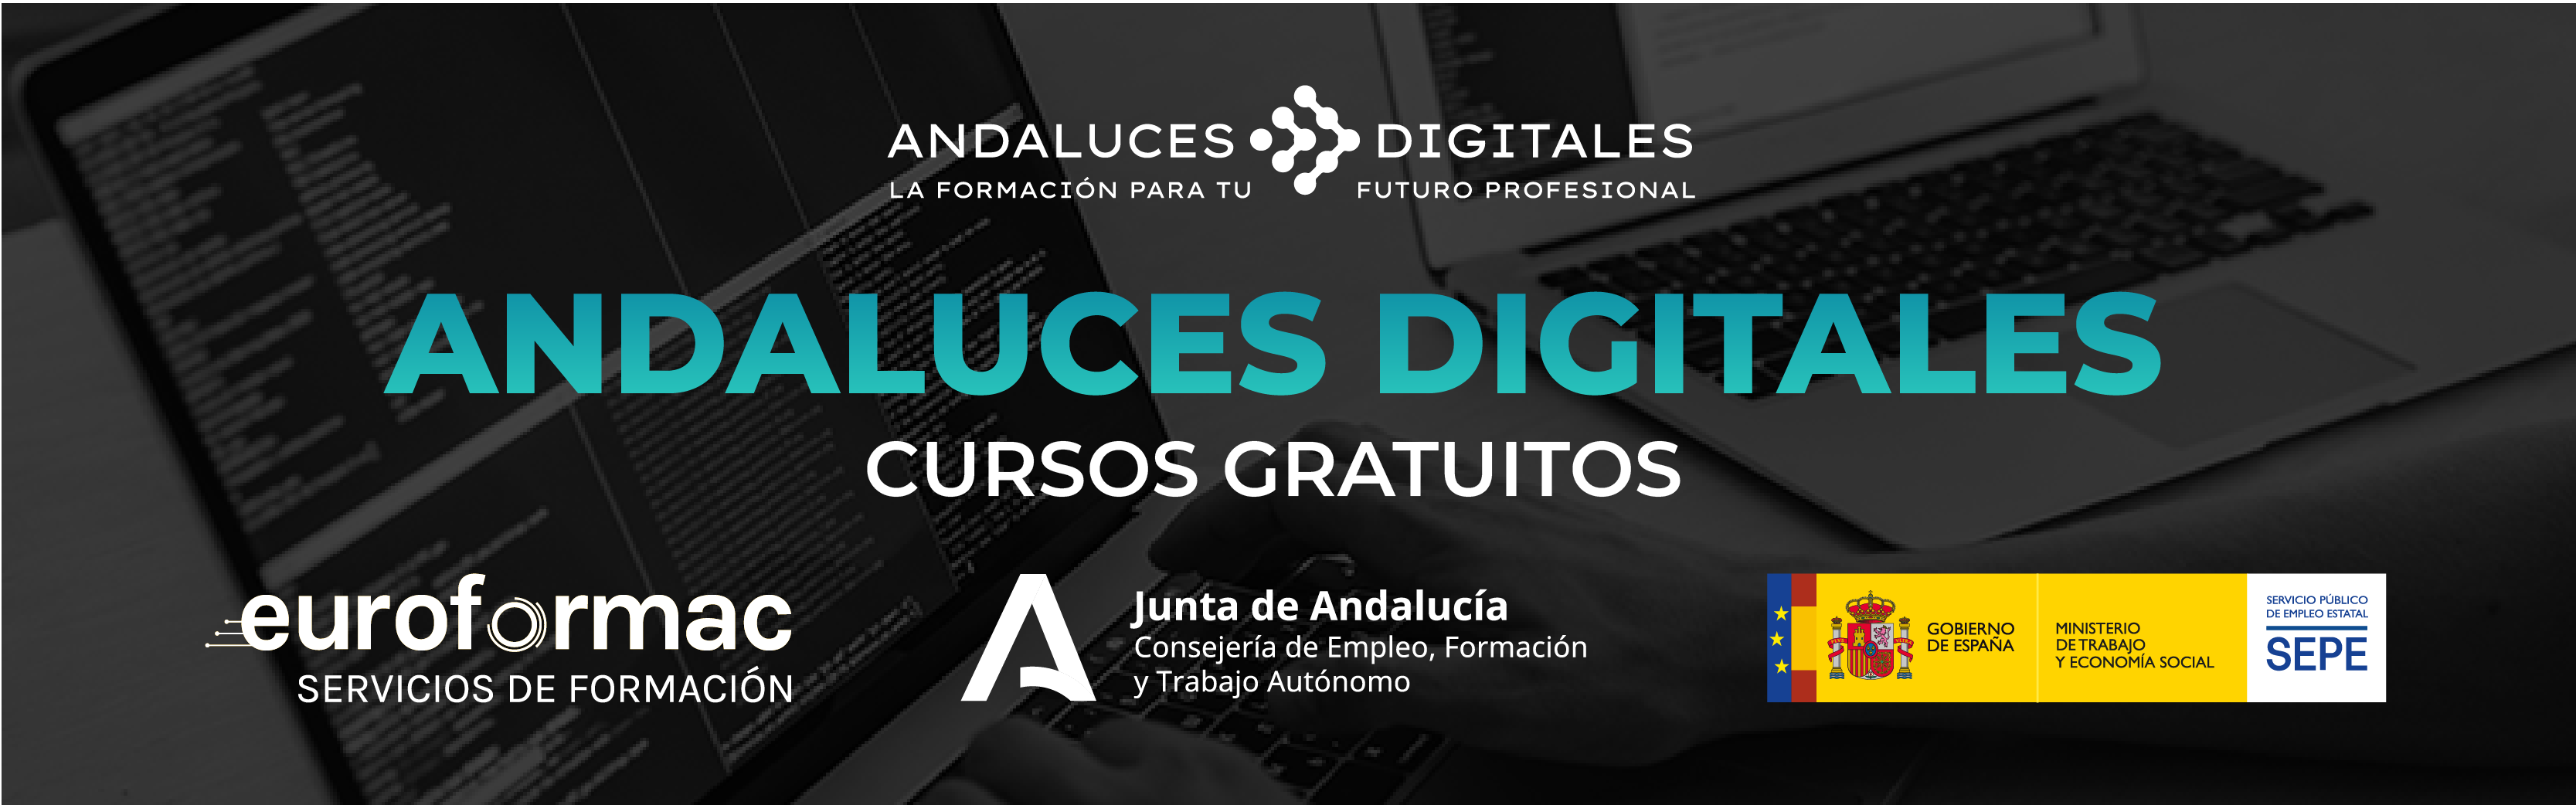 Cursos gratuitos Andaluces Digitales Granada